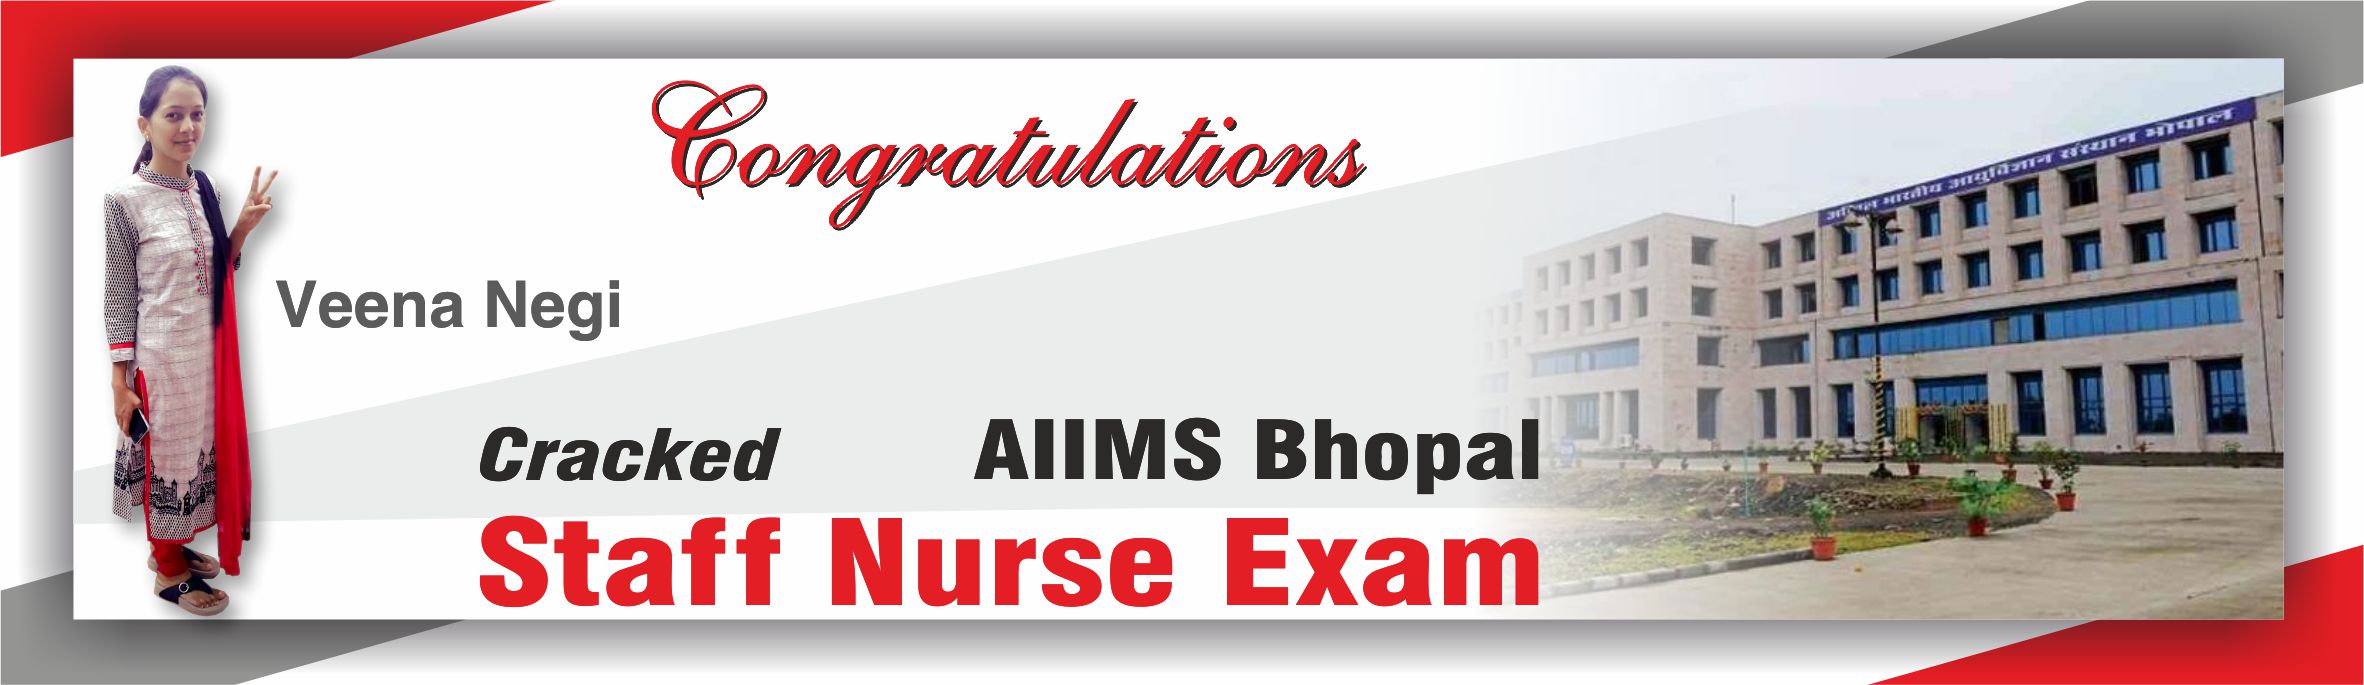 Veena nagi Cracked AIIMS Bhopal Staff Nurse Exam